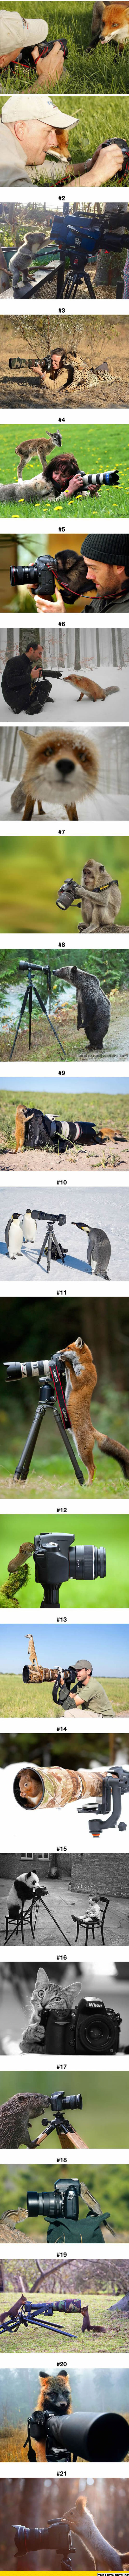 funny-animals-camera-photographers-wild